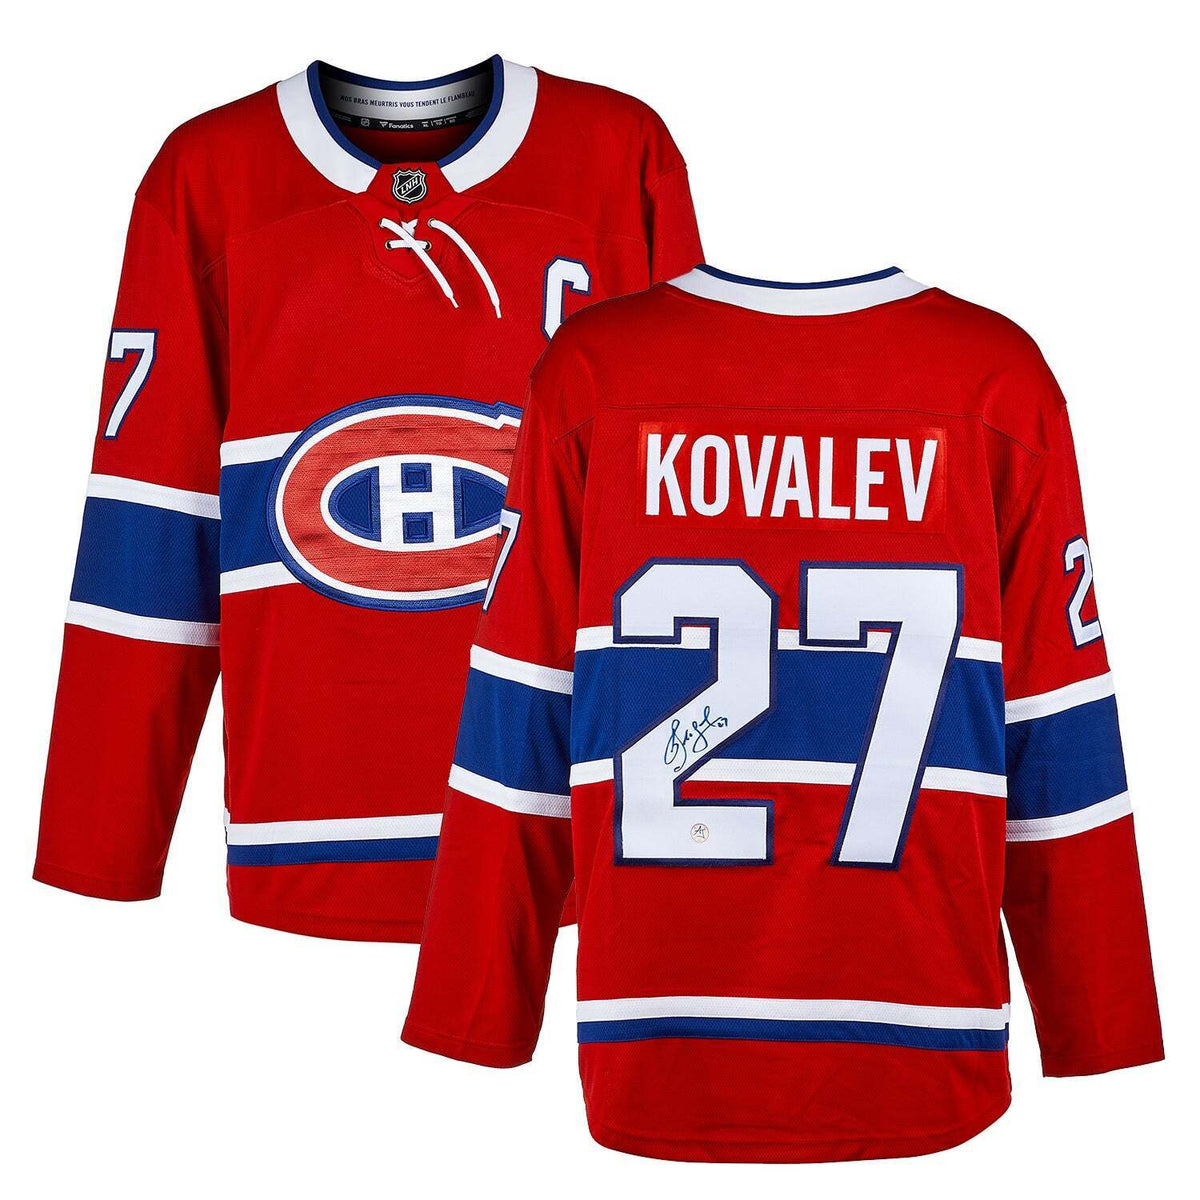 Alexei Kovalev Autographed Montreal Canadiens Fanatics Jersey